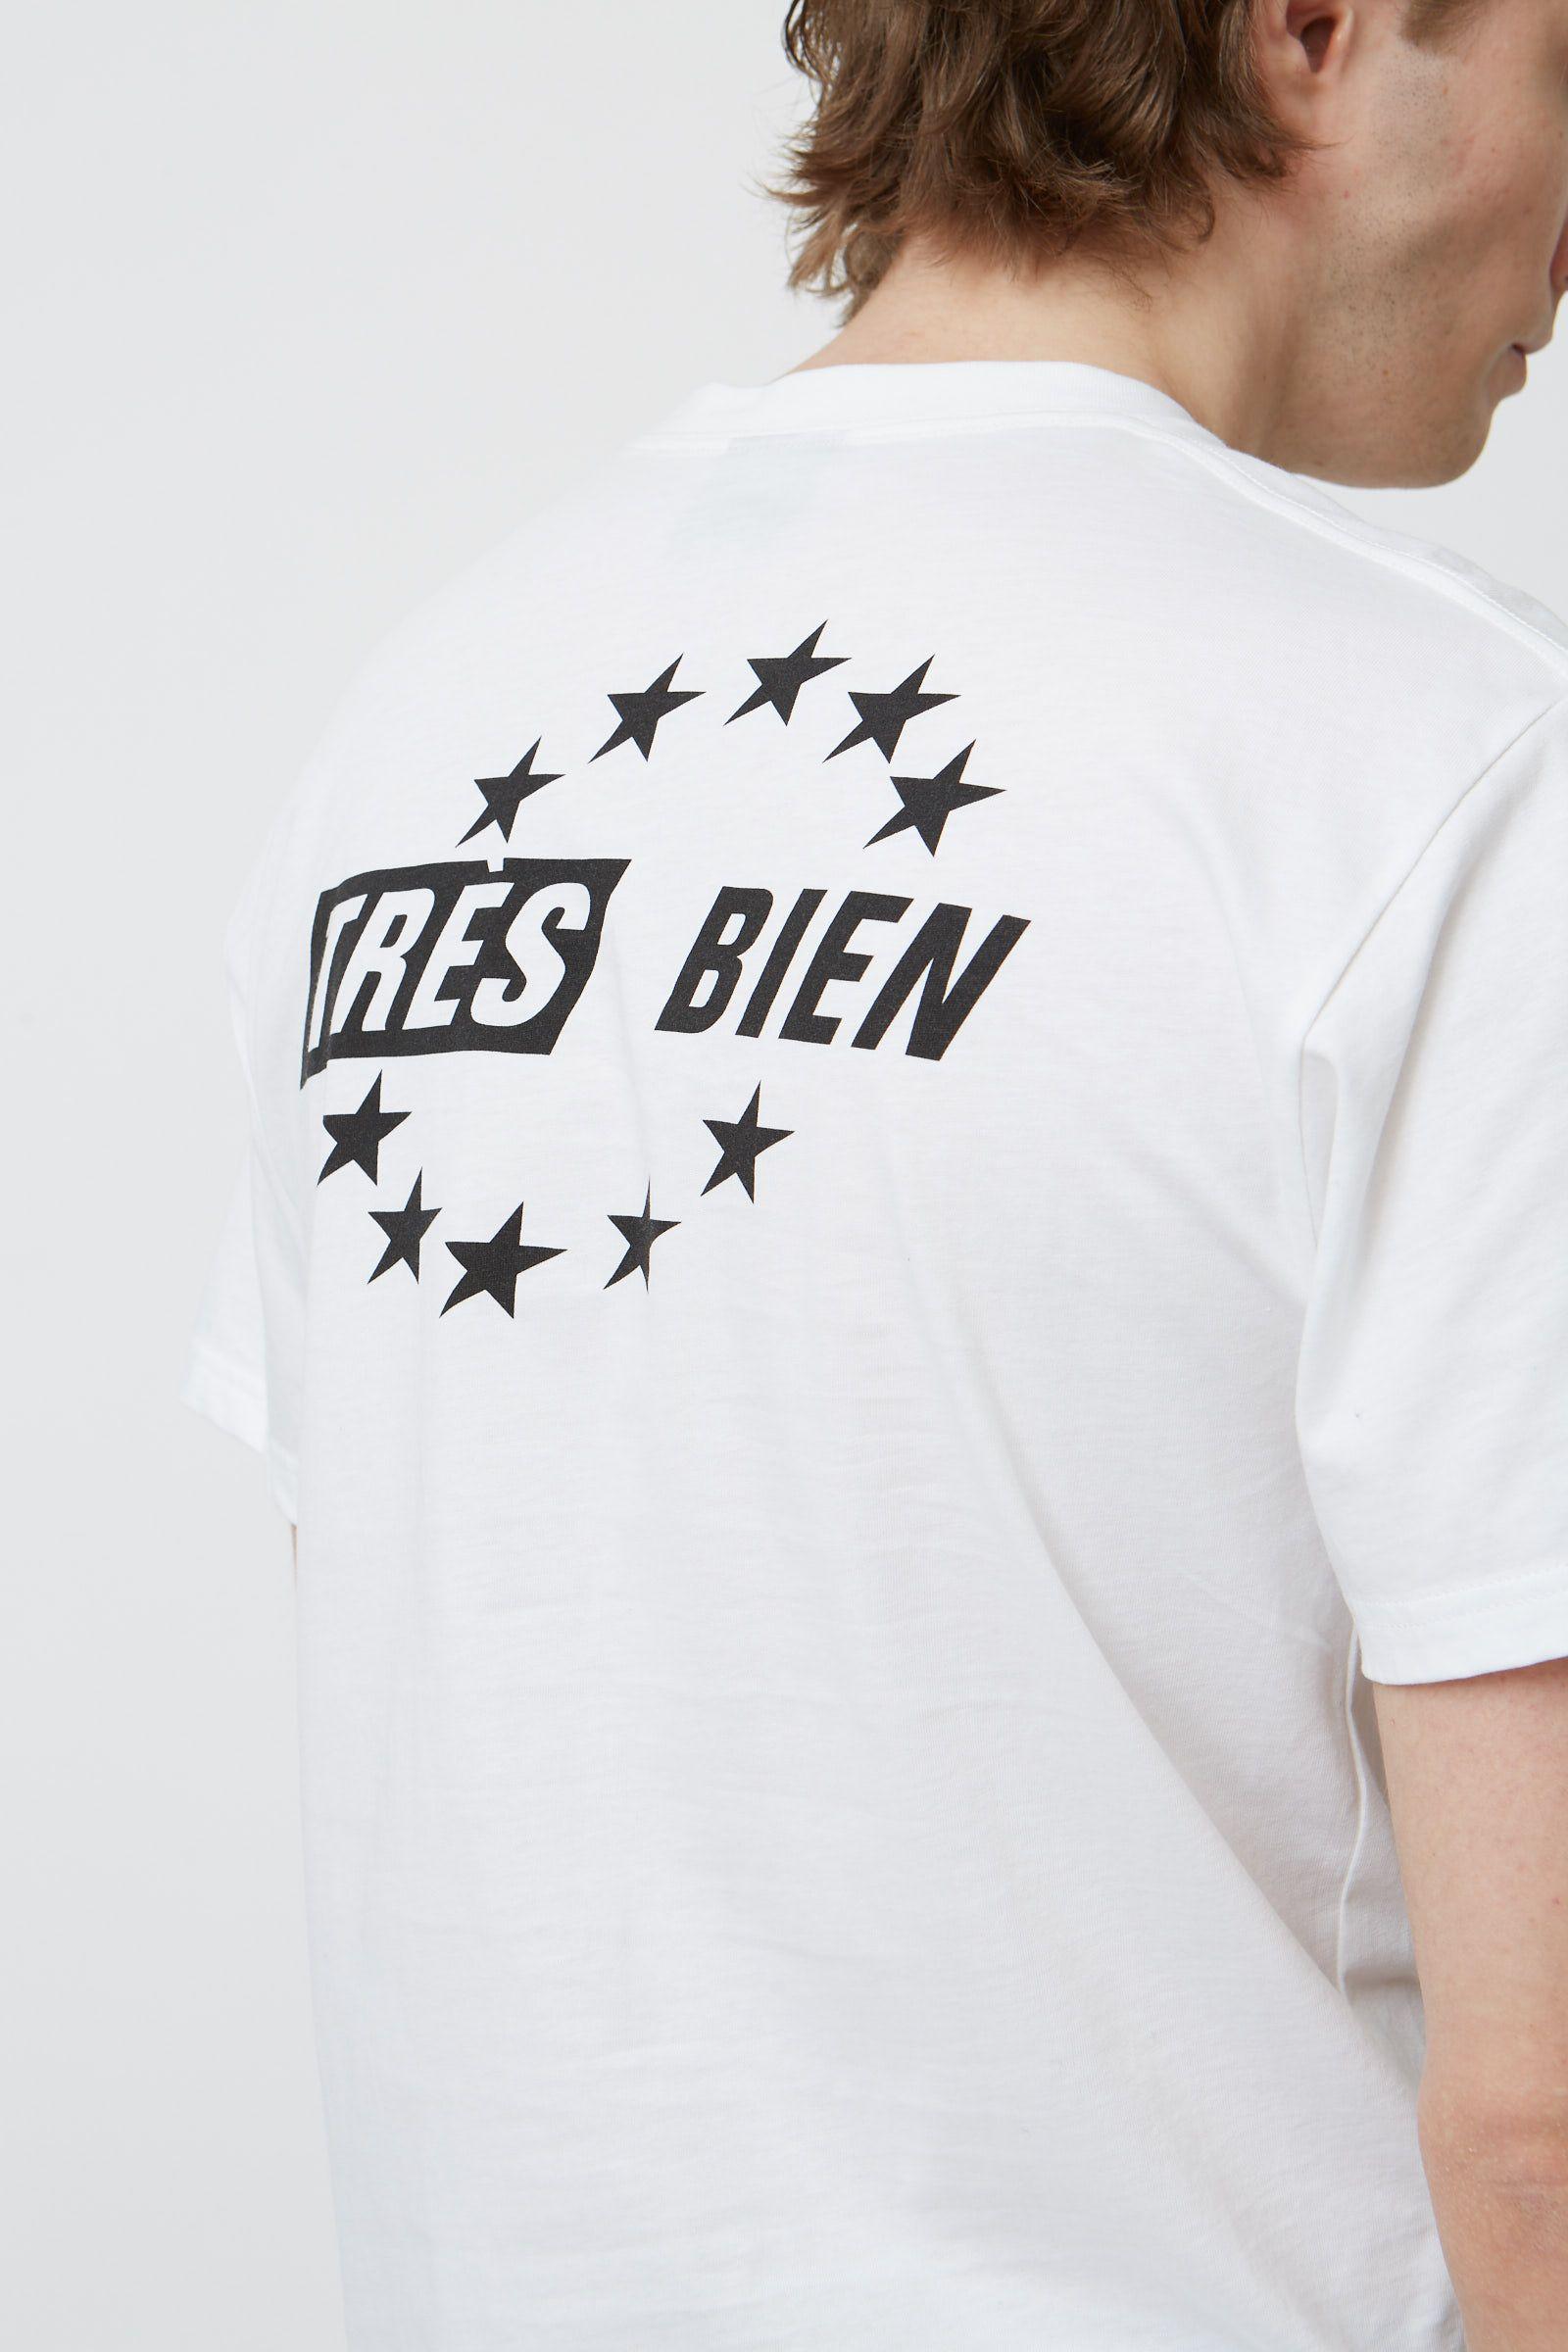 T and Star Logo - Wood Woodès Bien Star Logo T Shirt In White